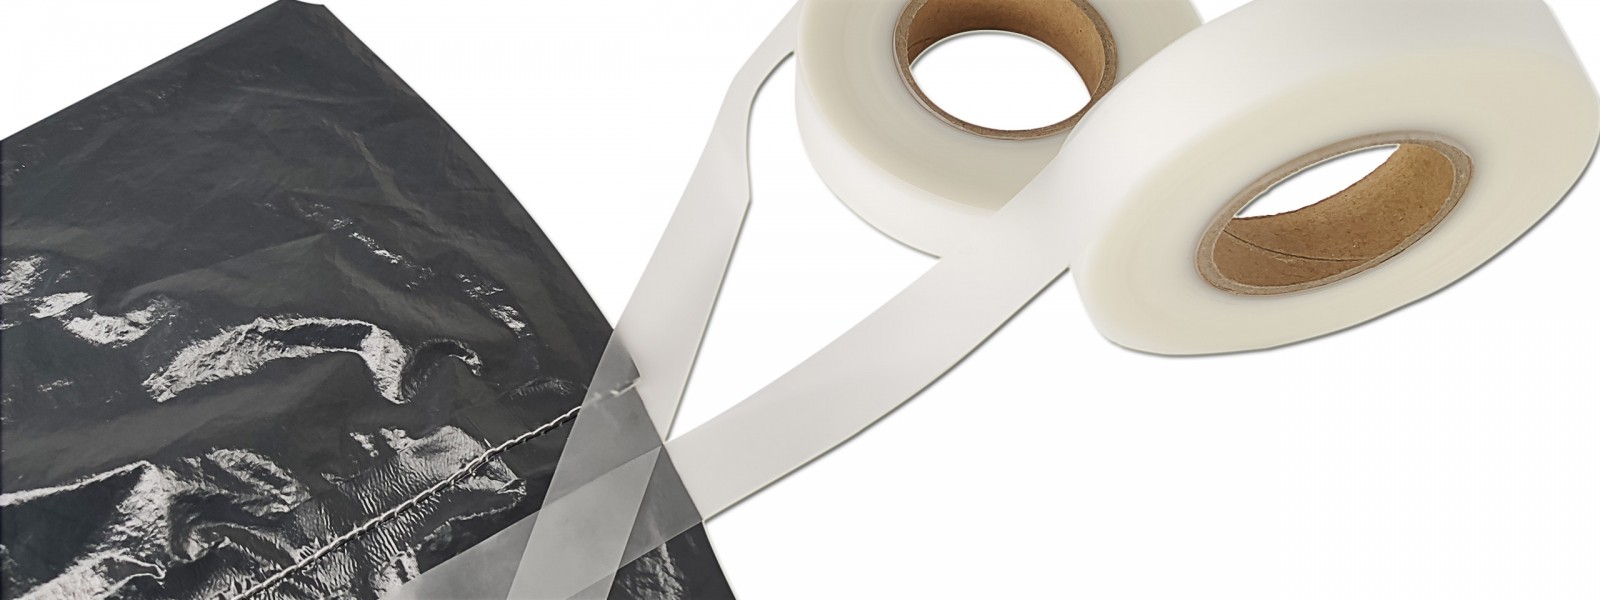 MinMax PU seam sealing tape for waterproof requare to keep a sewn garment watertight